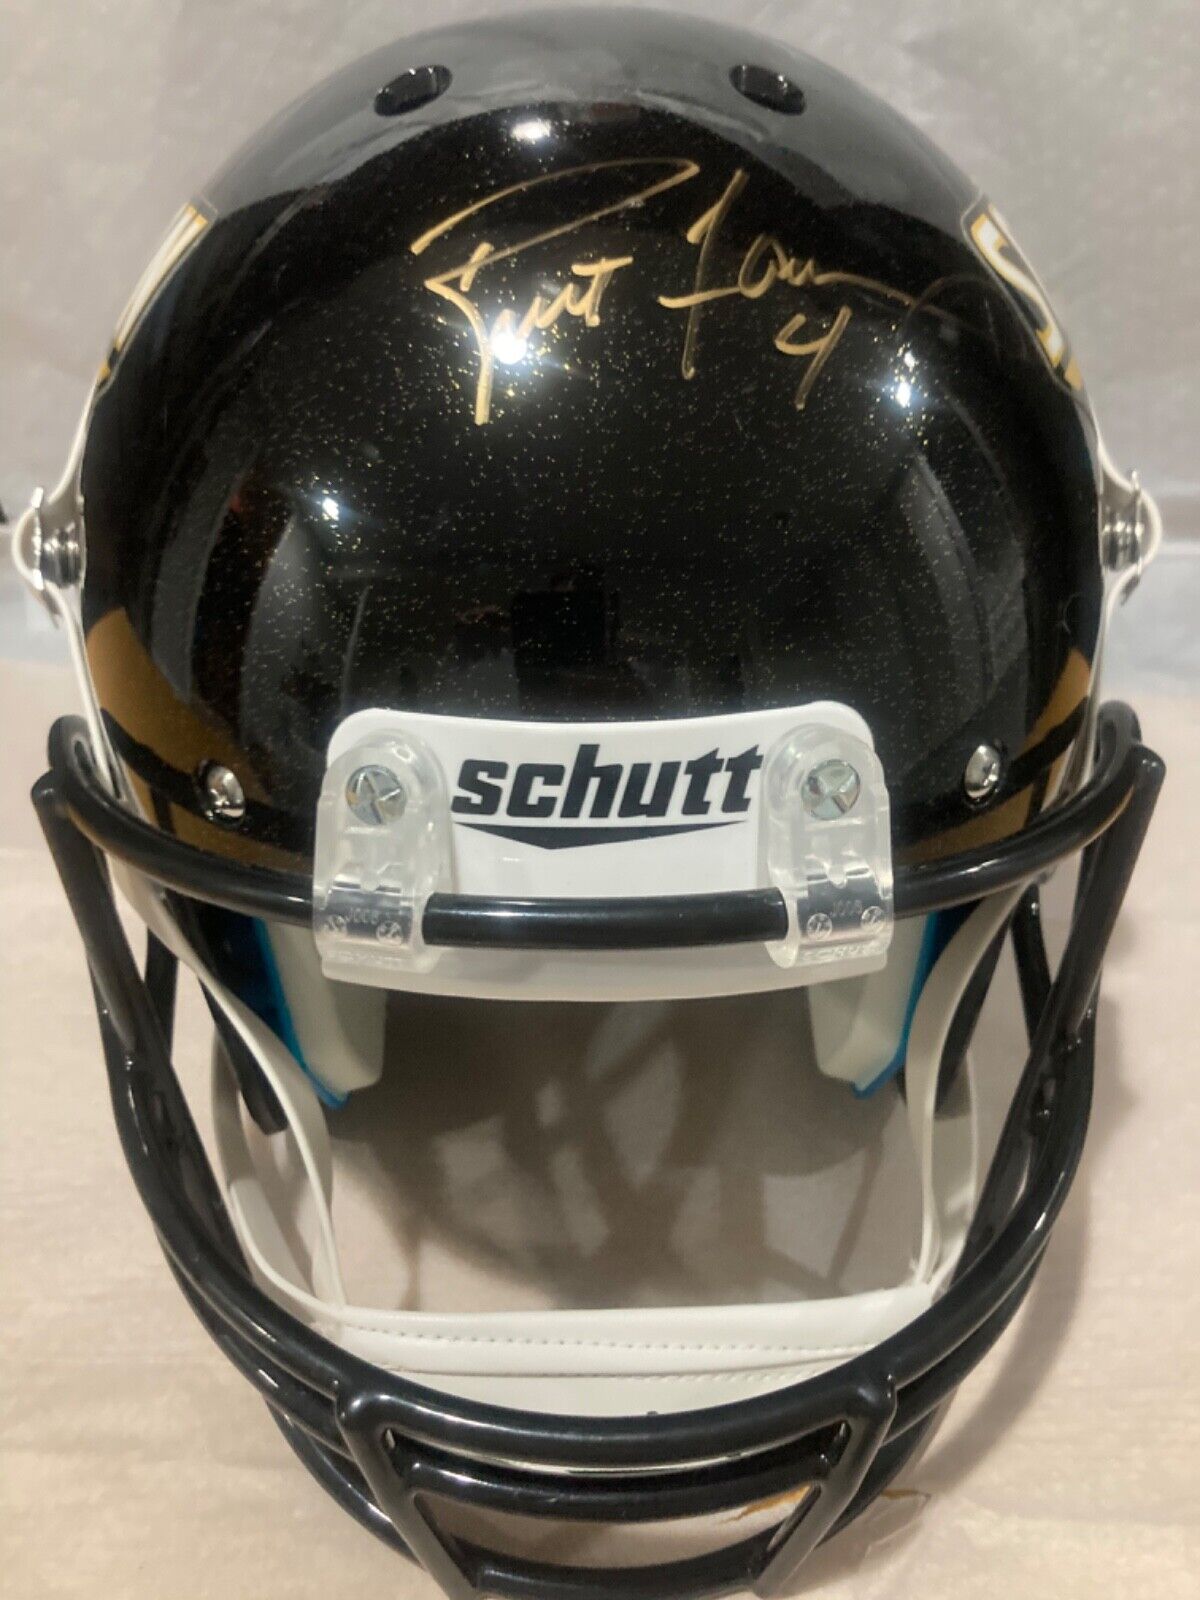 Brett Favre Autographed Southern Mississippi Football Helmet